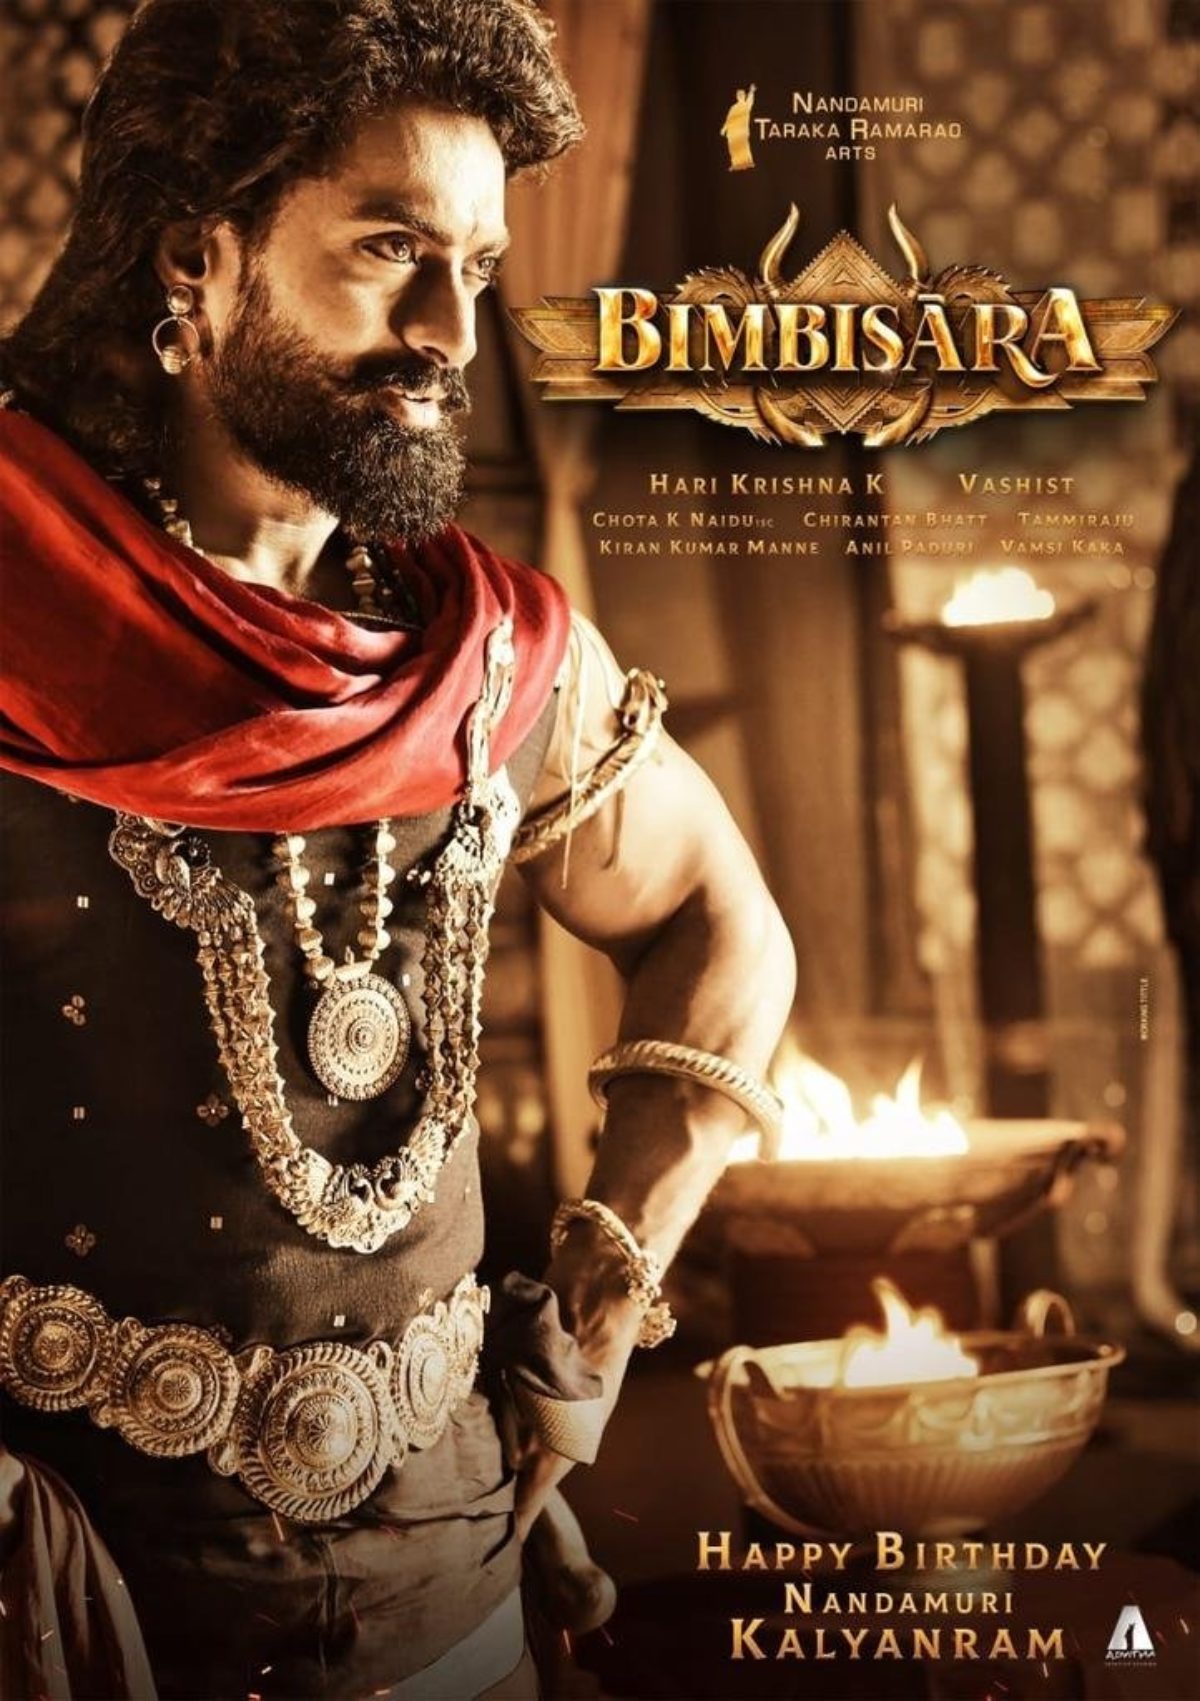 Pic Talk: Kalyan Ram looks menacing as Bimbisara - TeluguBulletin.com